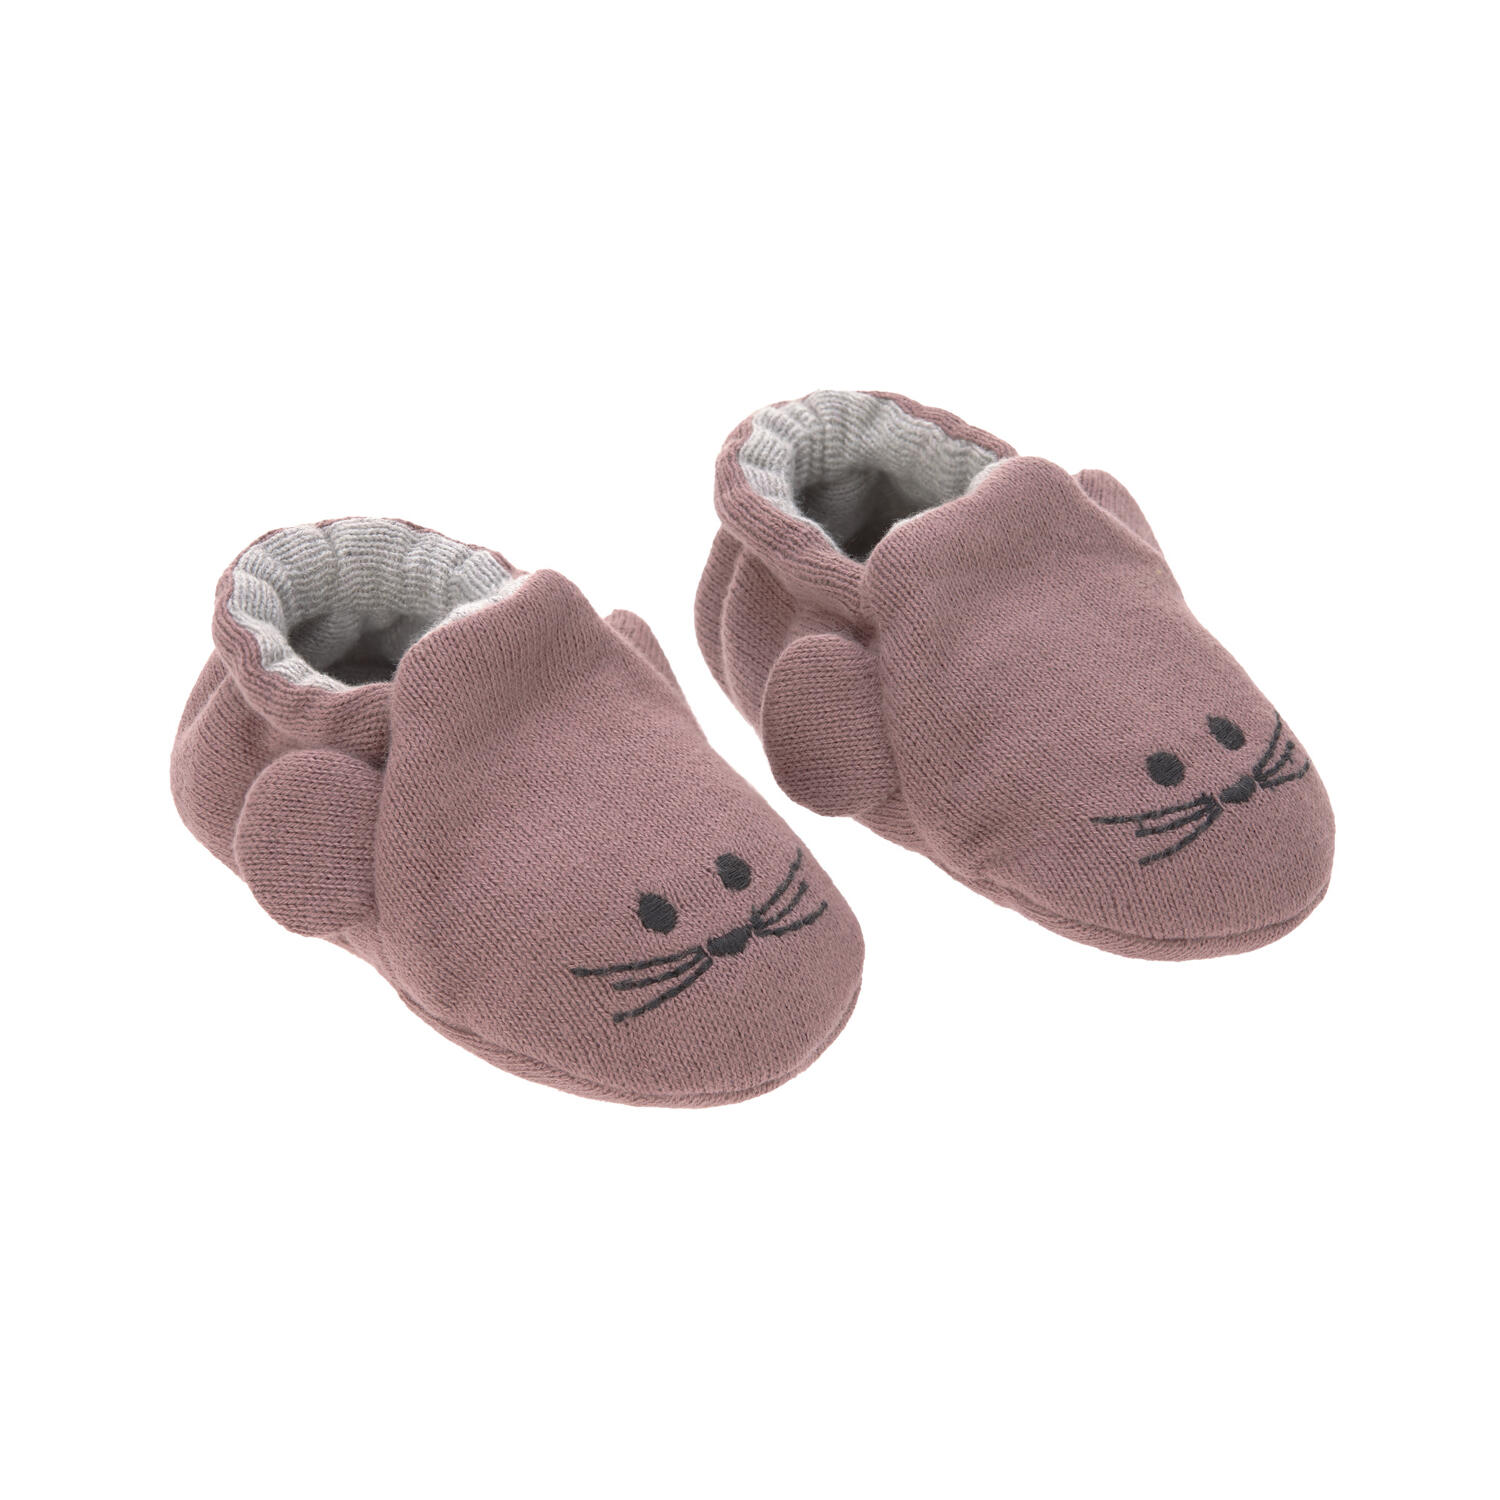 Lässig Lässig Baby Schuhe, Little Chums Mouse, Maus, 0 - | Letzshop